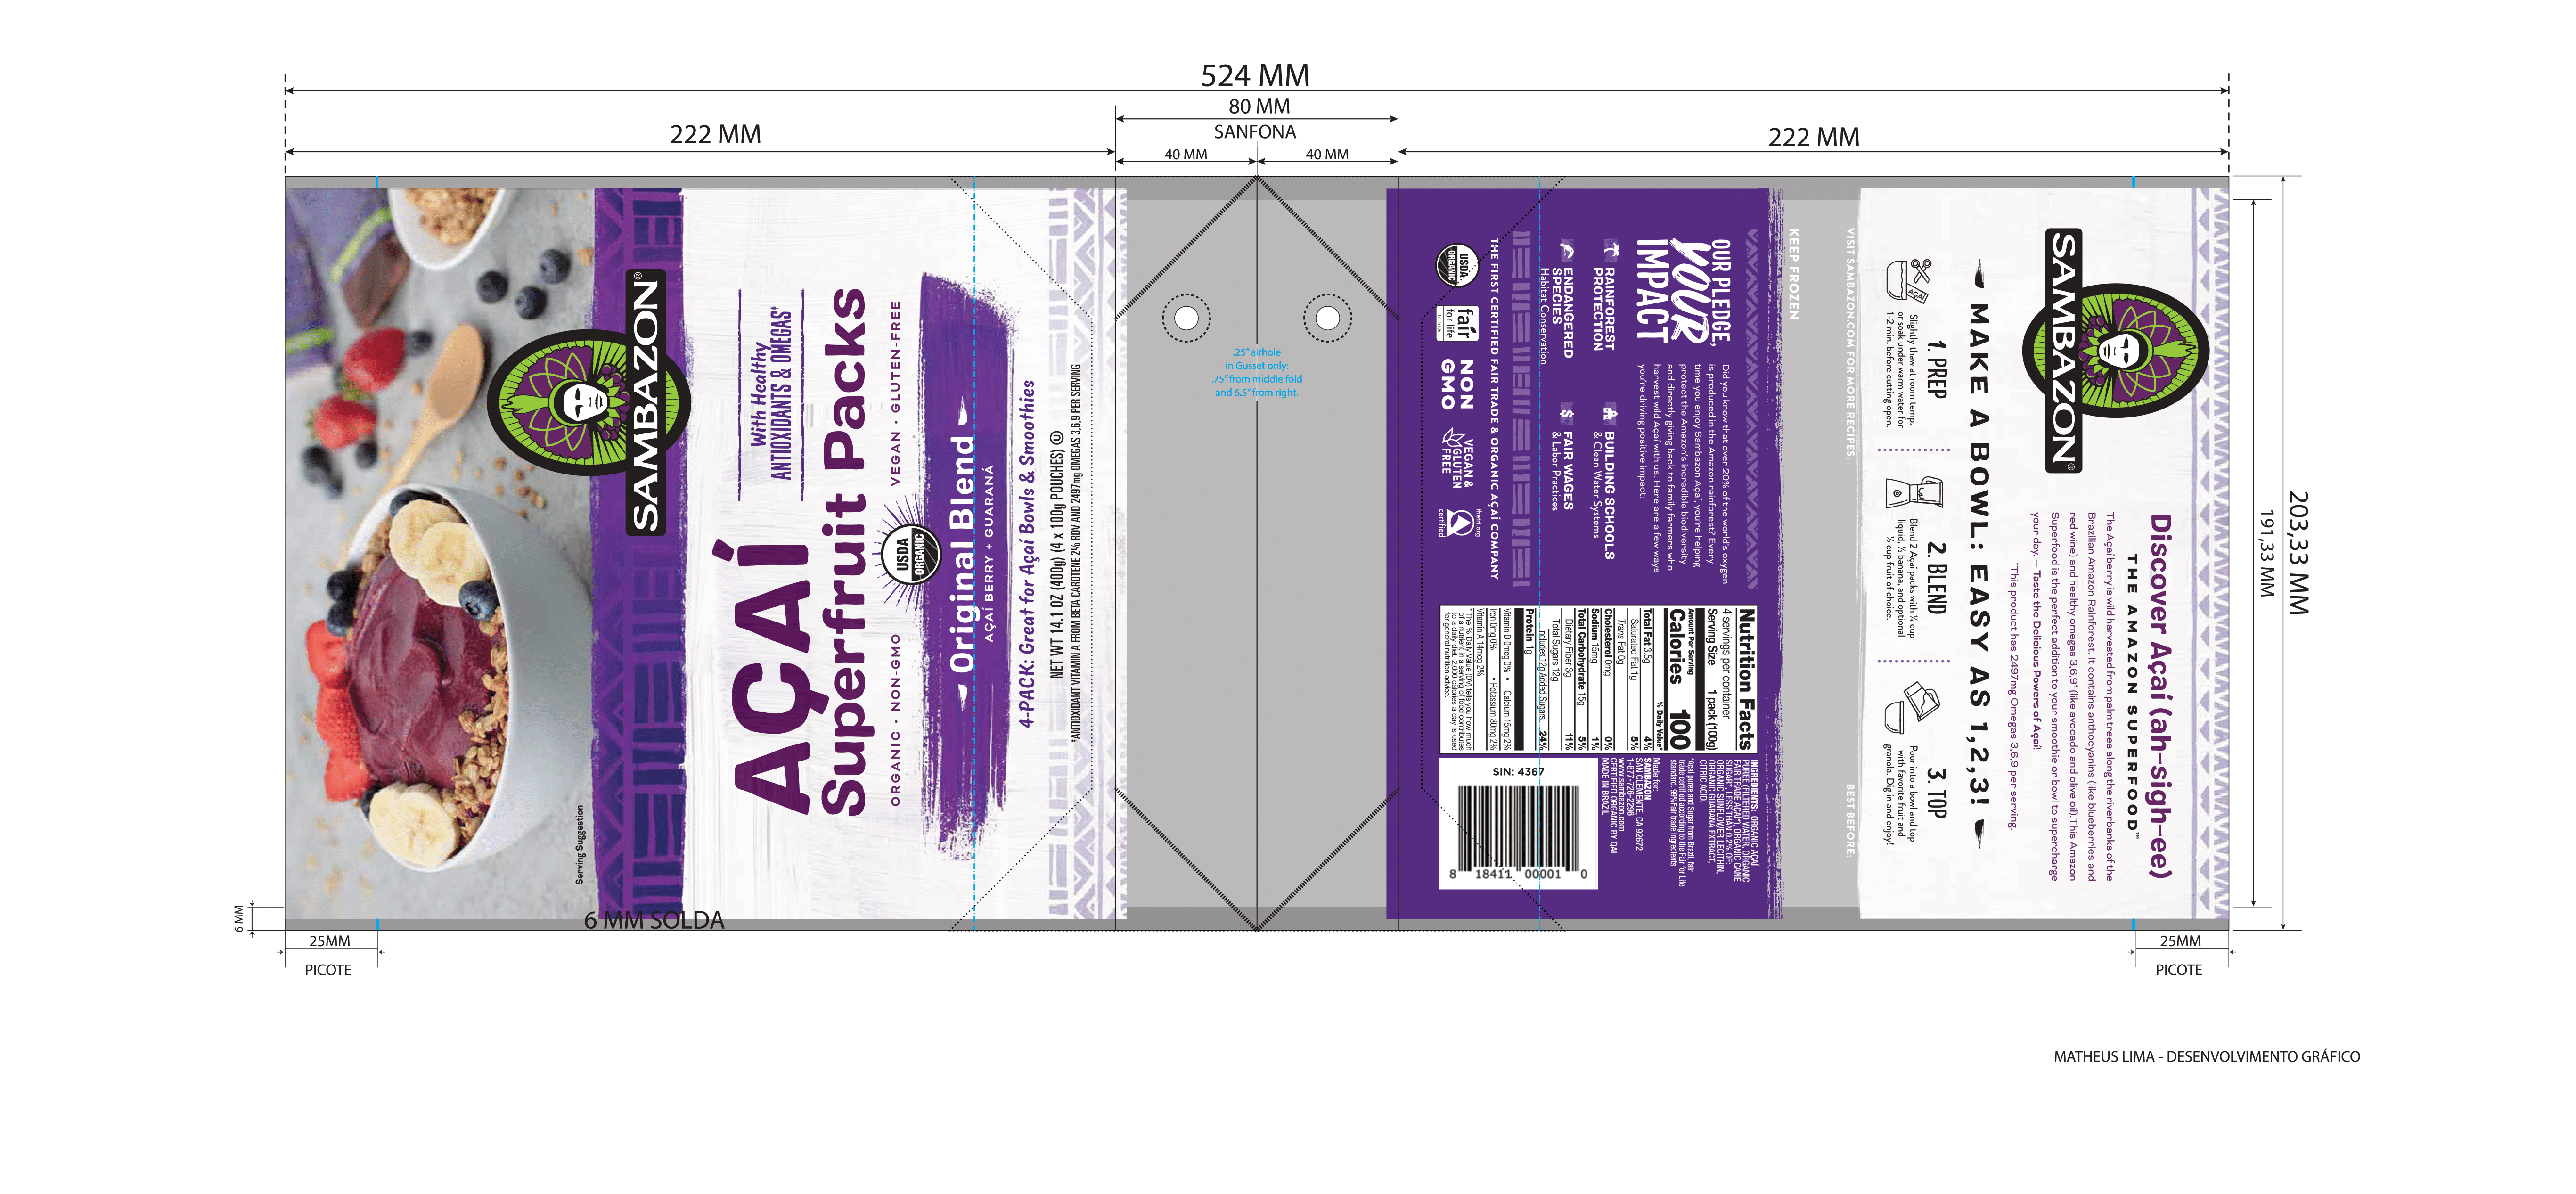 Sambazon Acai Bites 9 units per case 0.9 oz Product Label